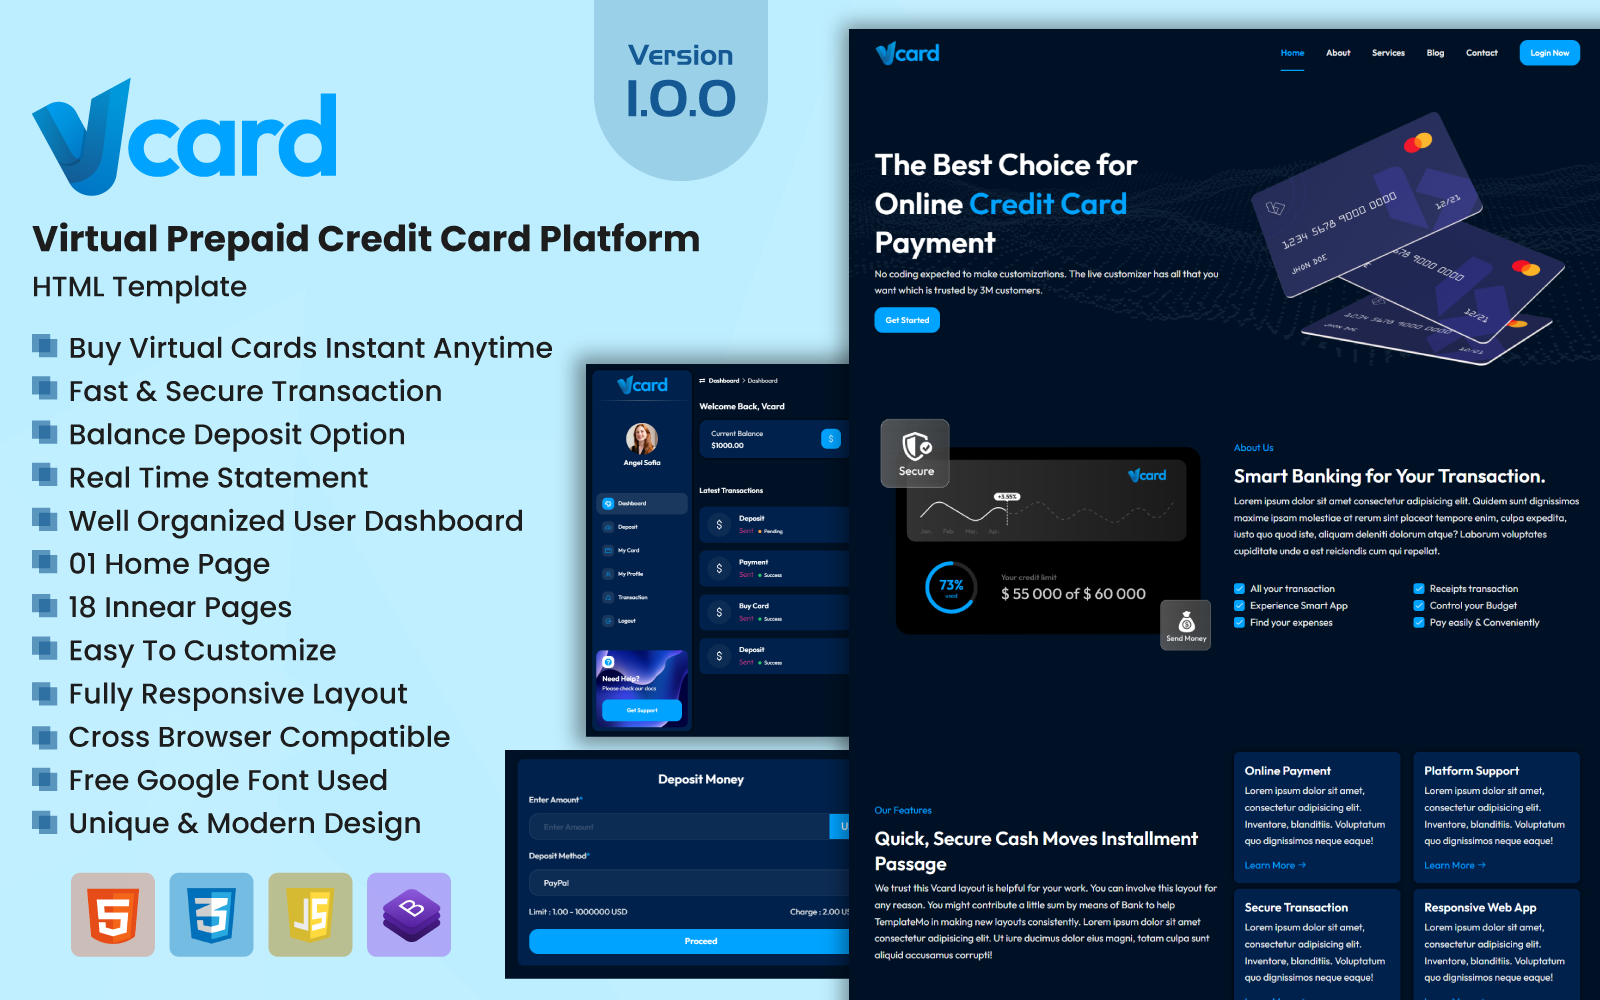 vCard - Virtual Prepaid Credit Card Platform